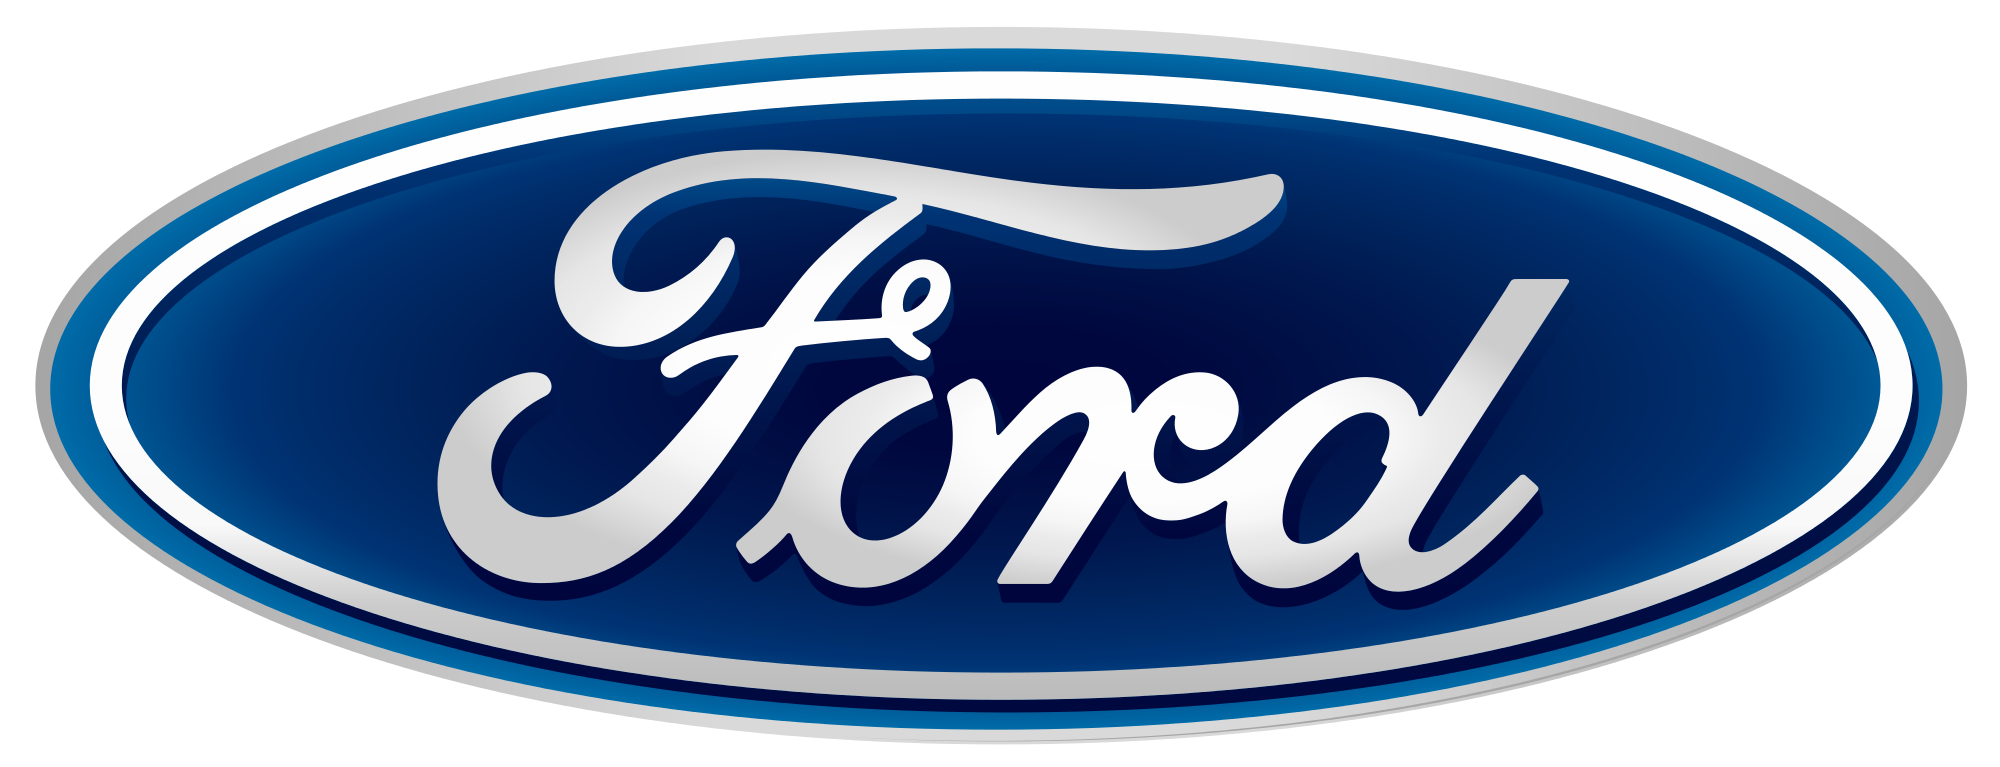 AutoNation Ford Margate